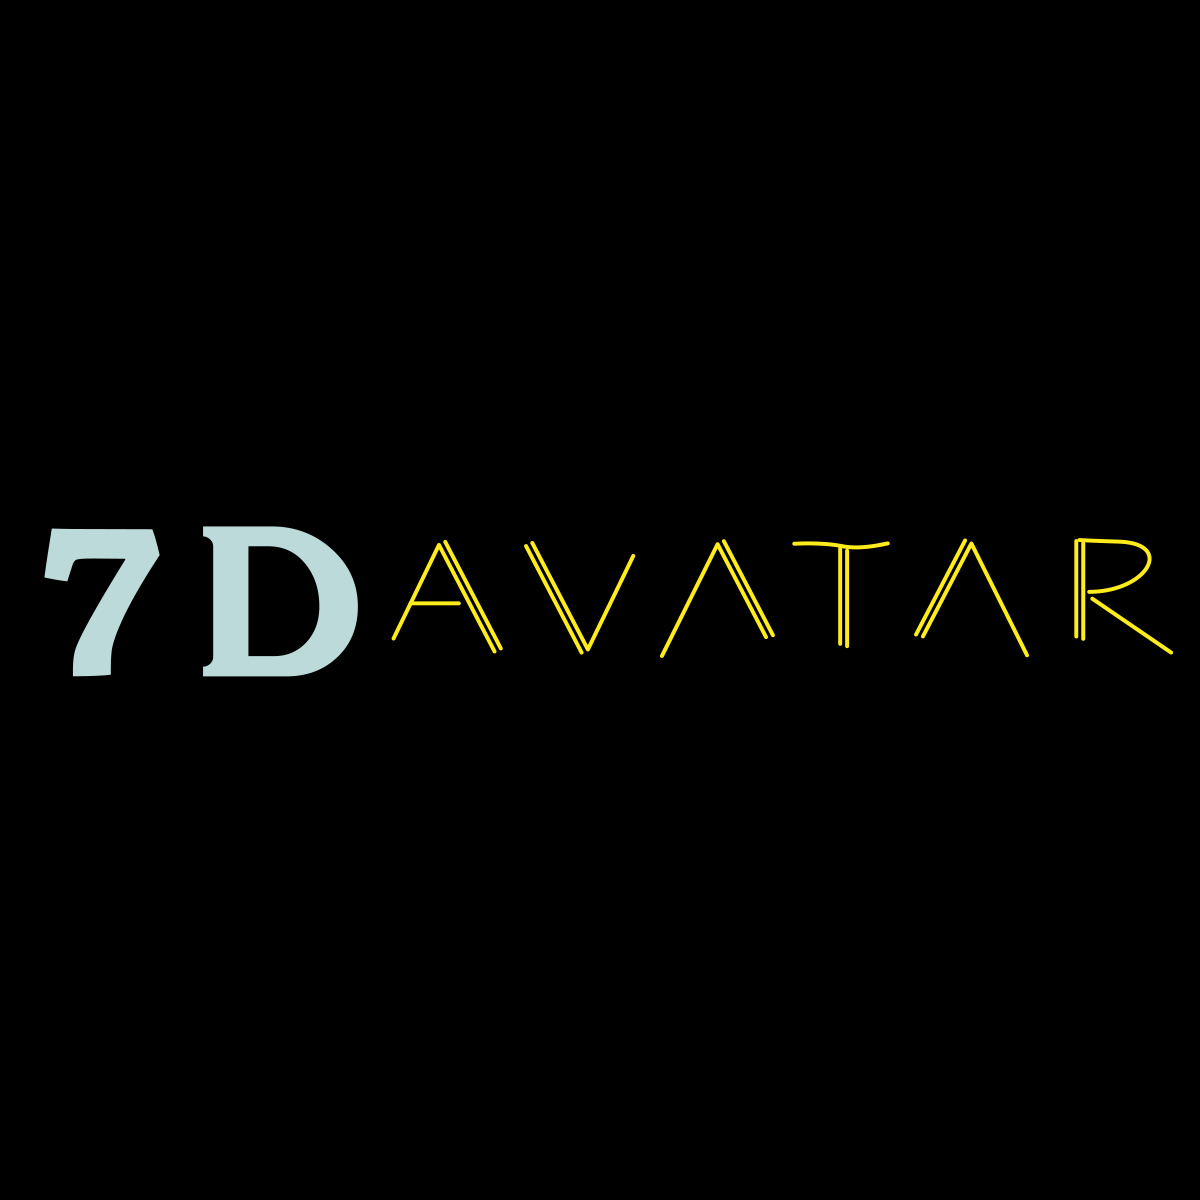 7D Avatar